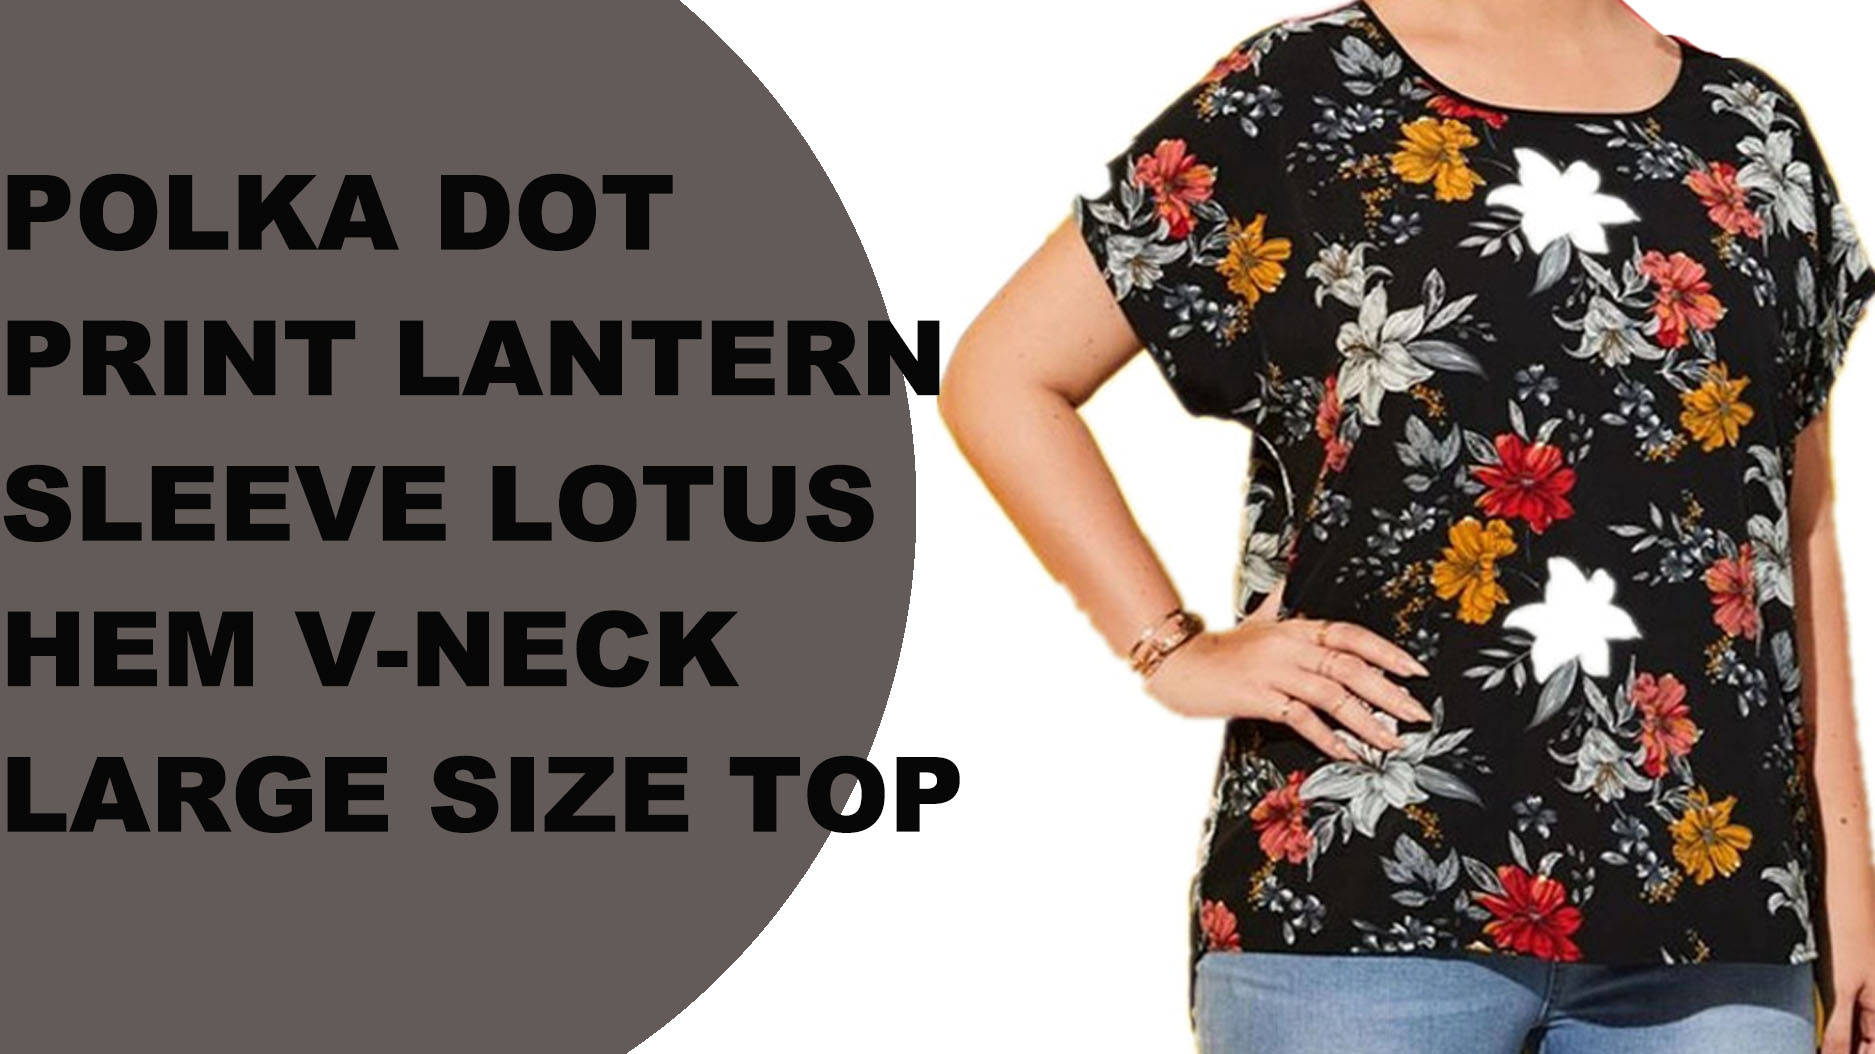 AUSCHALINK- Polka dot print lantern sleeve Lotus hem V-neck top size top